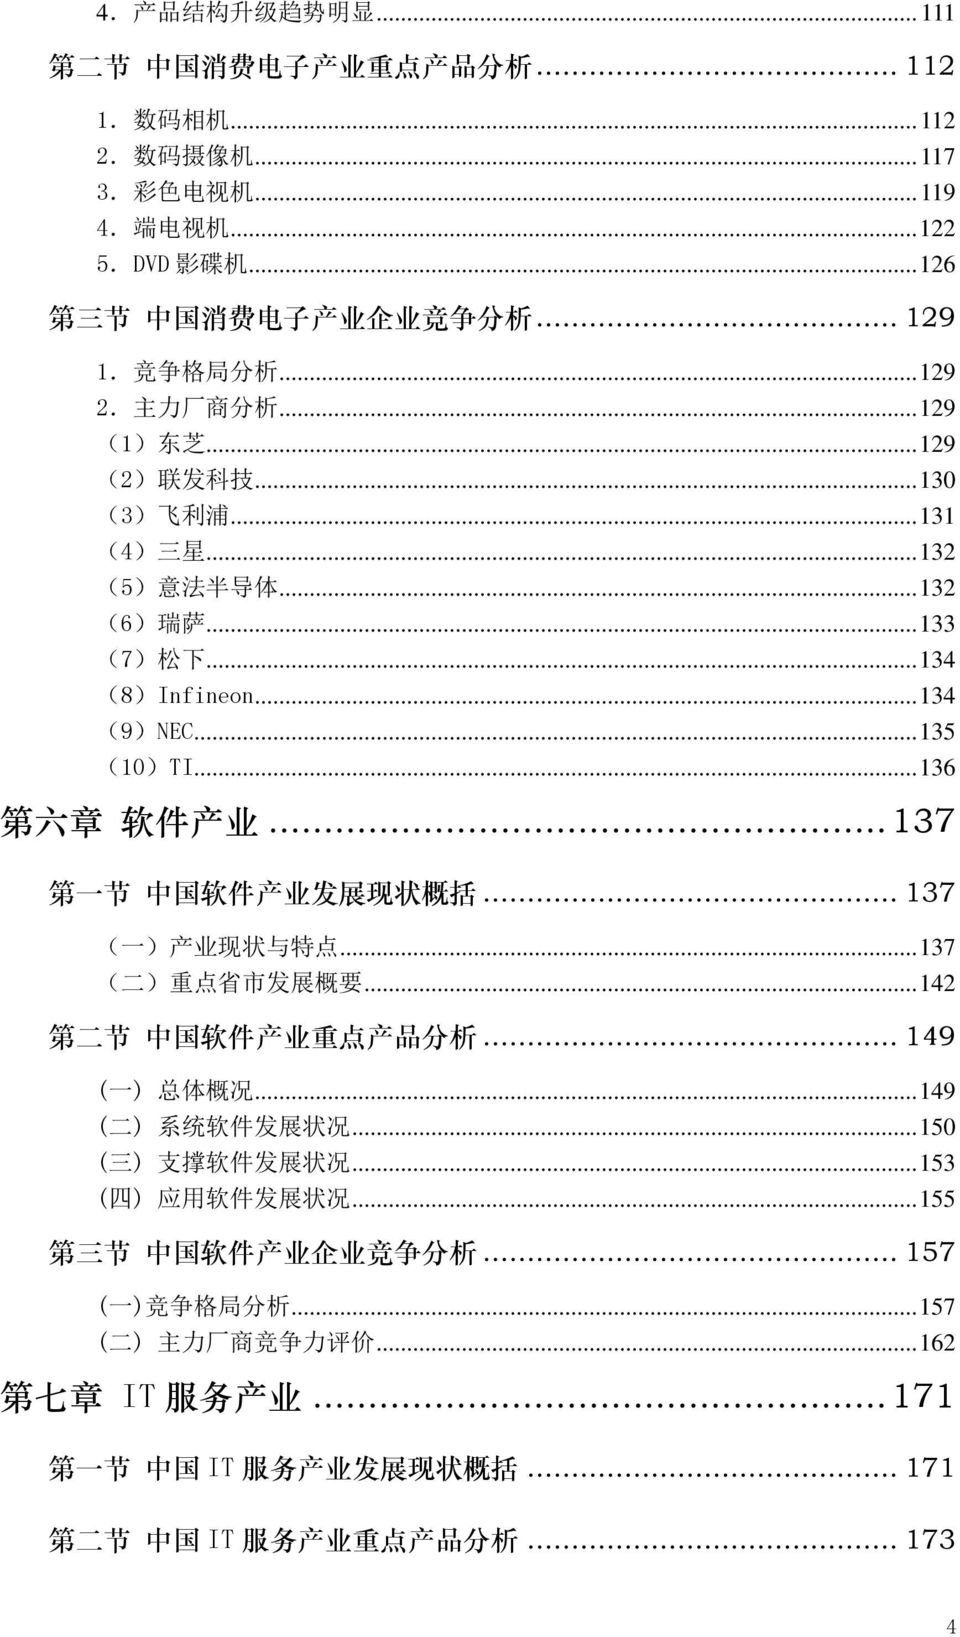 .. 135 (10)TI... 136 第 六 章 软 件 产 业... 137 第 一 节 中 国 软 件 产 业 发 展 现 状 概 括... 137 ( 一 ) 产 业 现 状 与 特 点... 137 ( 二 ) 重 点 省 市 发 展 概 要... 142 第 二 节 中 国 软 件 产 业 重 点 产 品 分 析... 149 ( 一 ) 总 体 概 况.